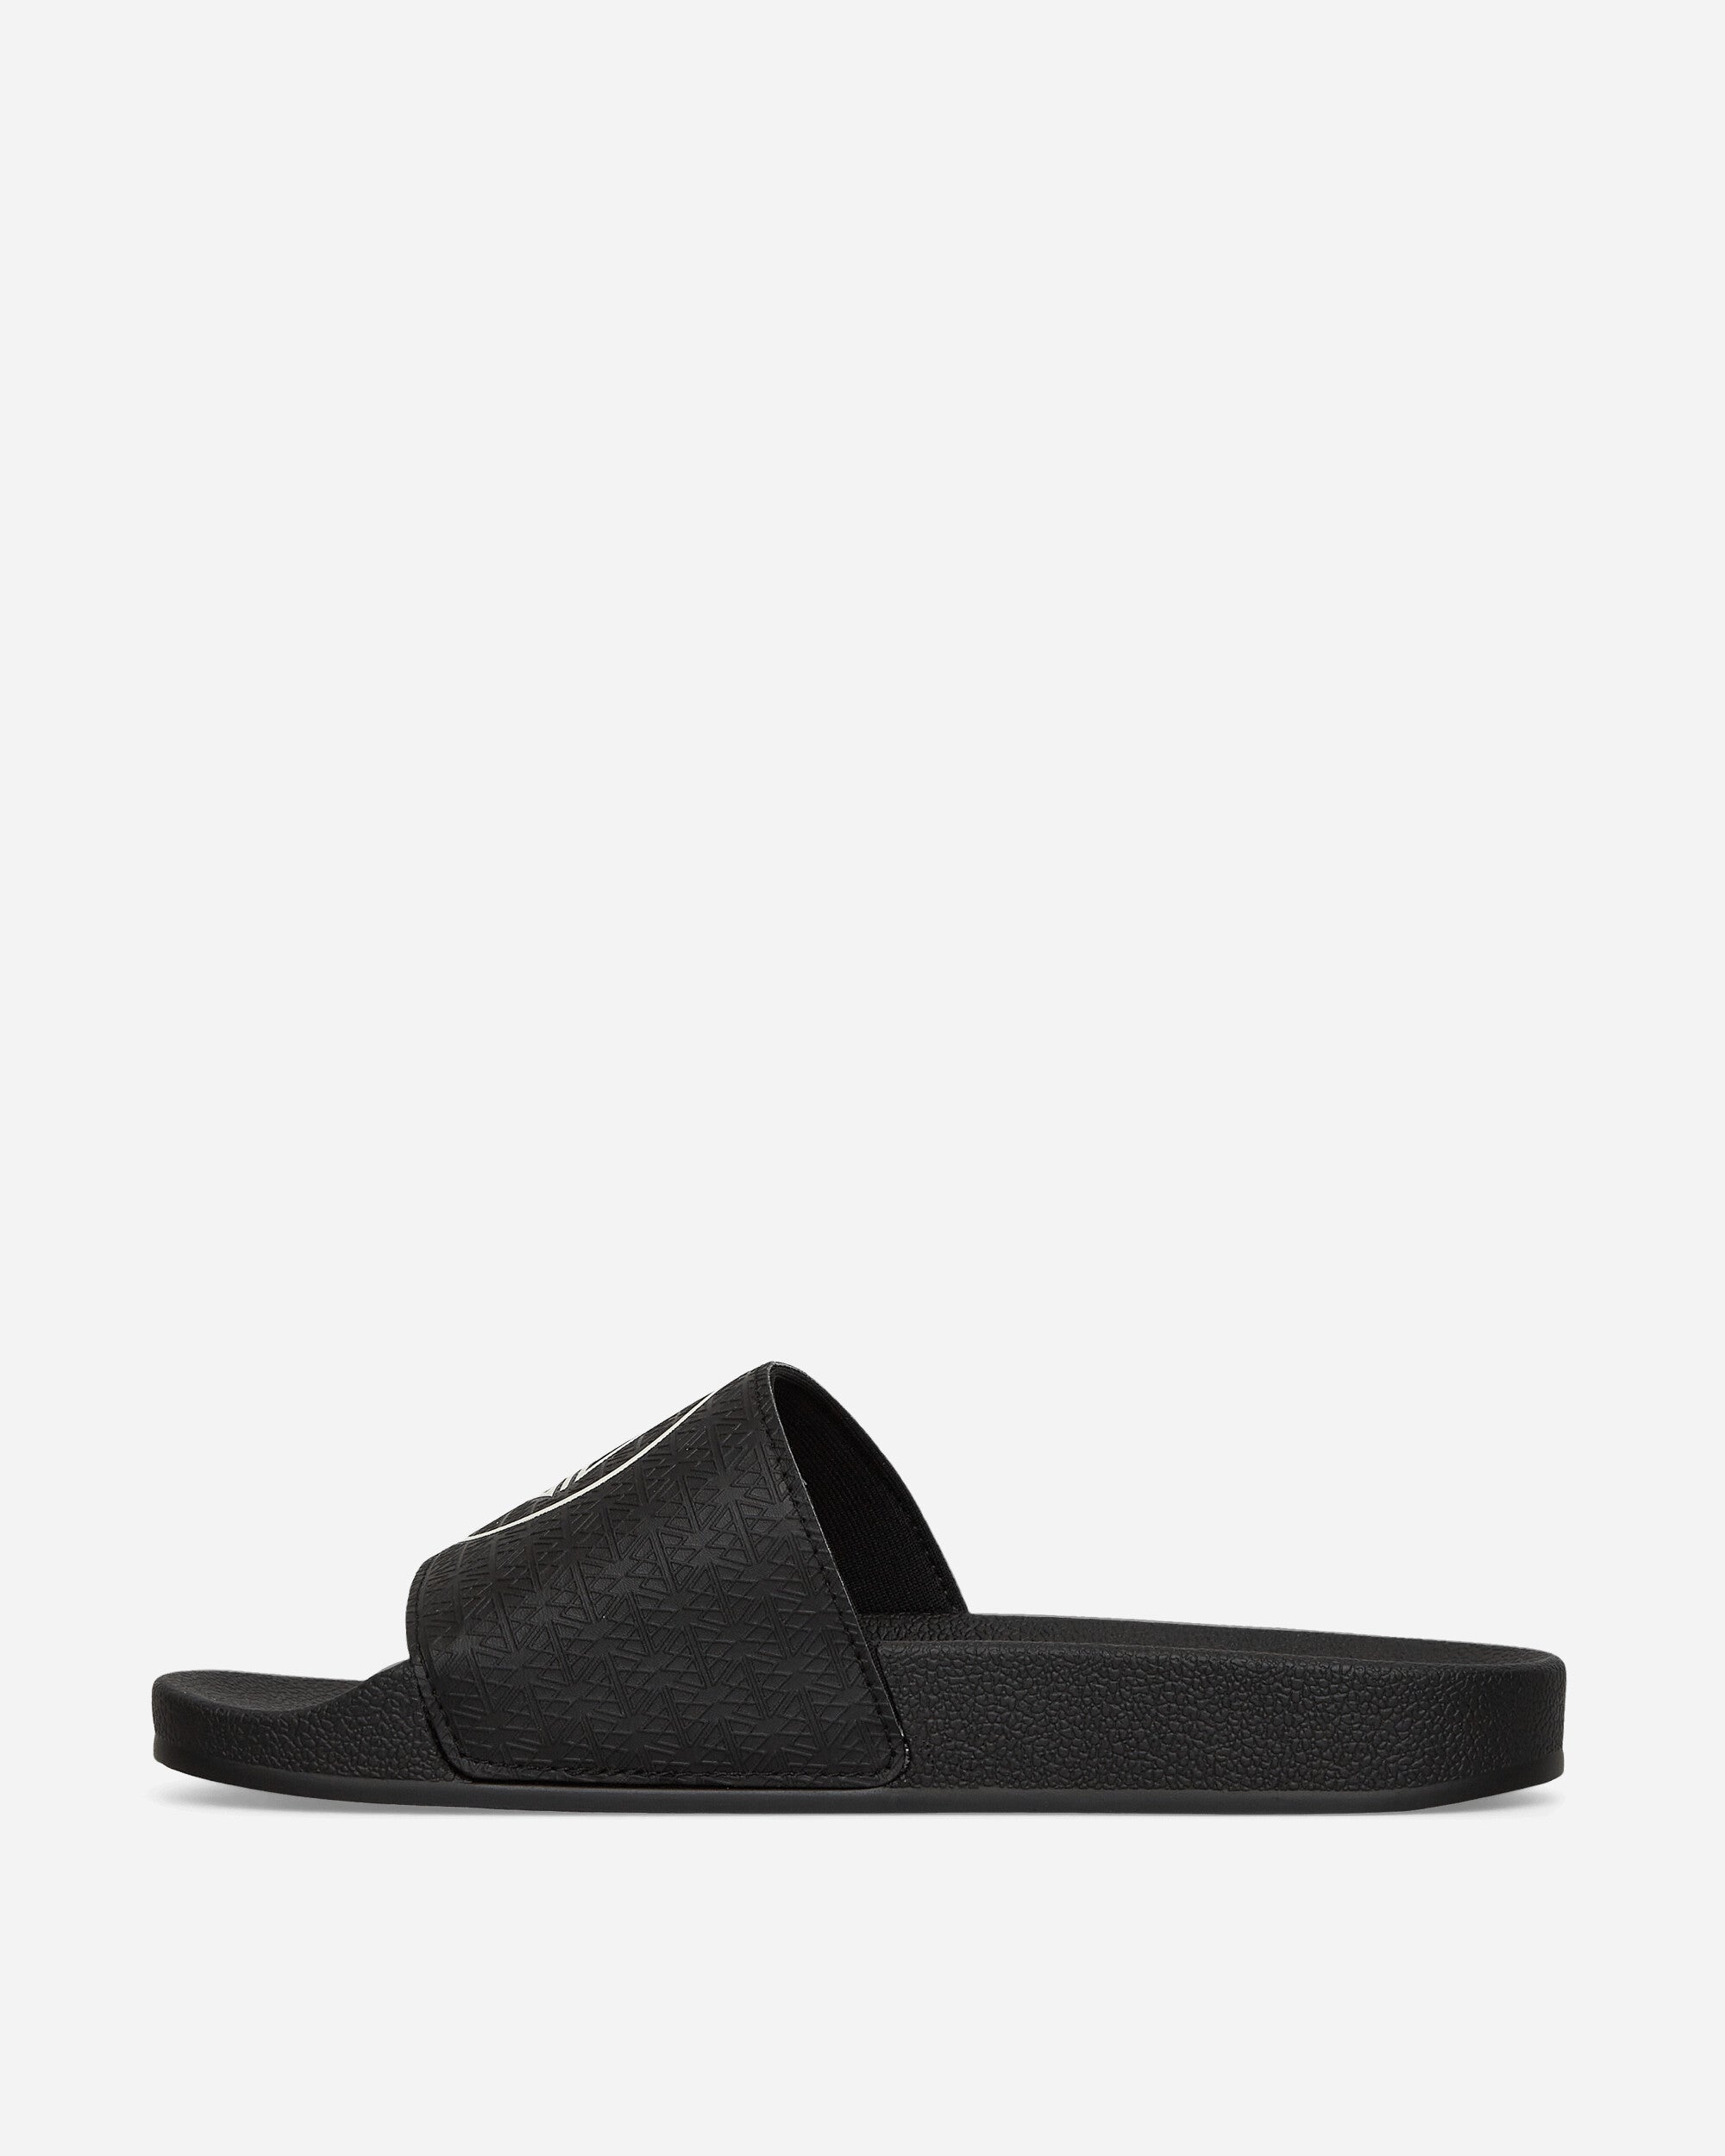 adidas Adilette Spzl Core Black/Chalk White Sandals and Slides Slides IG8941 001